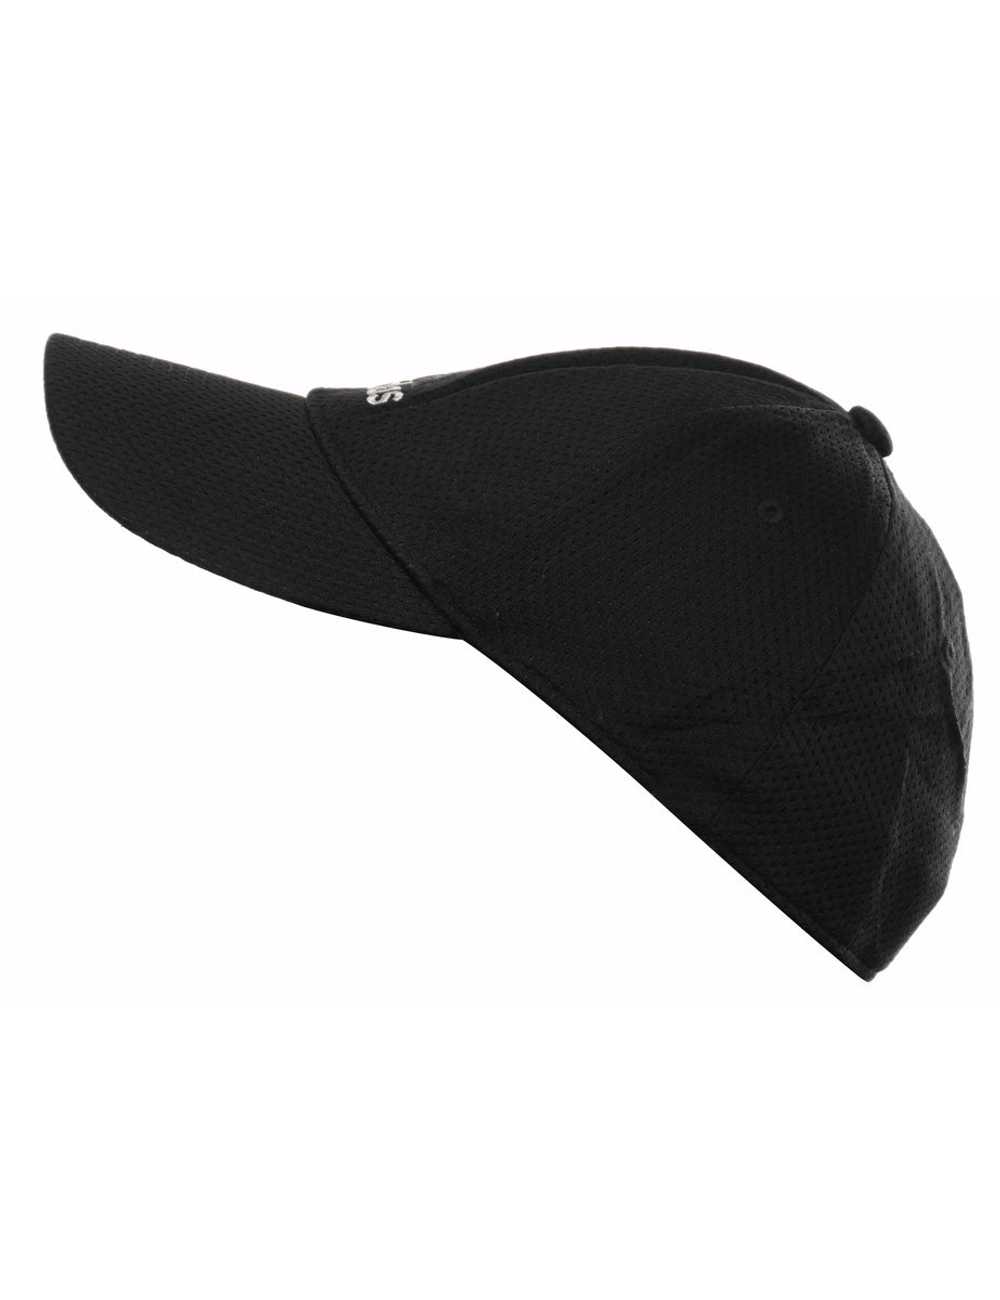 Adidas Black Sporty Cap - M - image 3